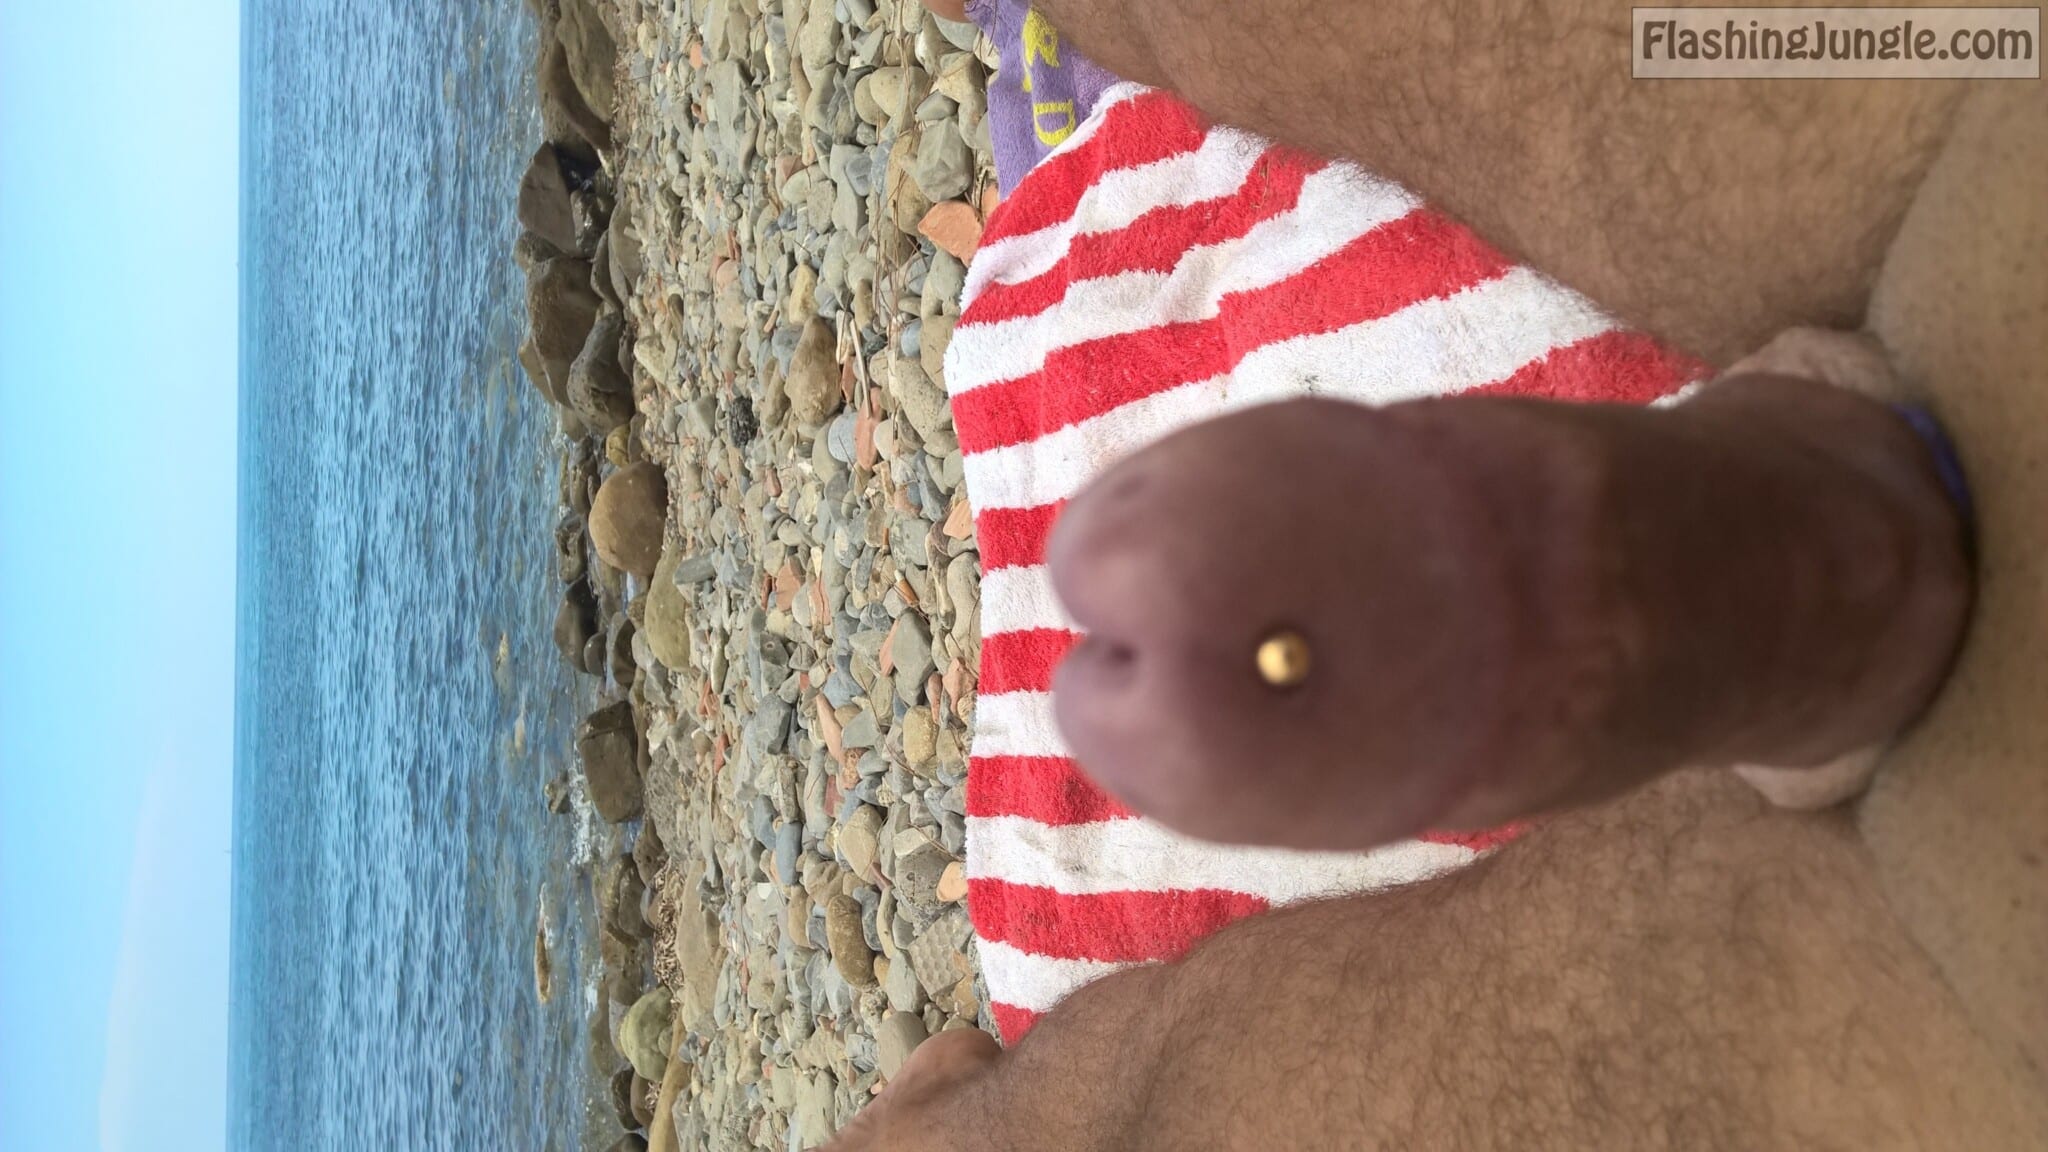 Nude Beach Pics Dick Flash Pics - Amateur dick flash on beach piercing show off